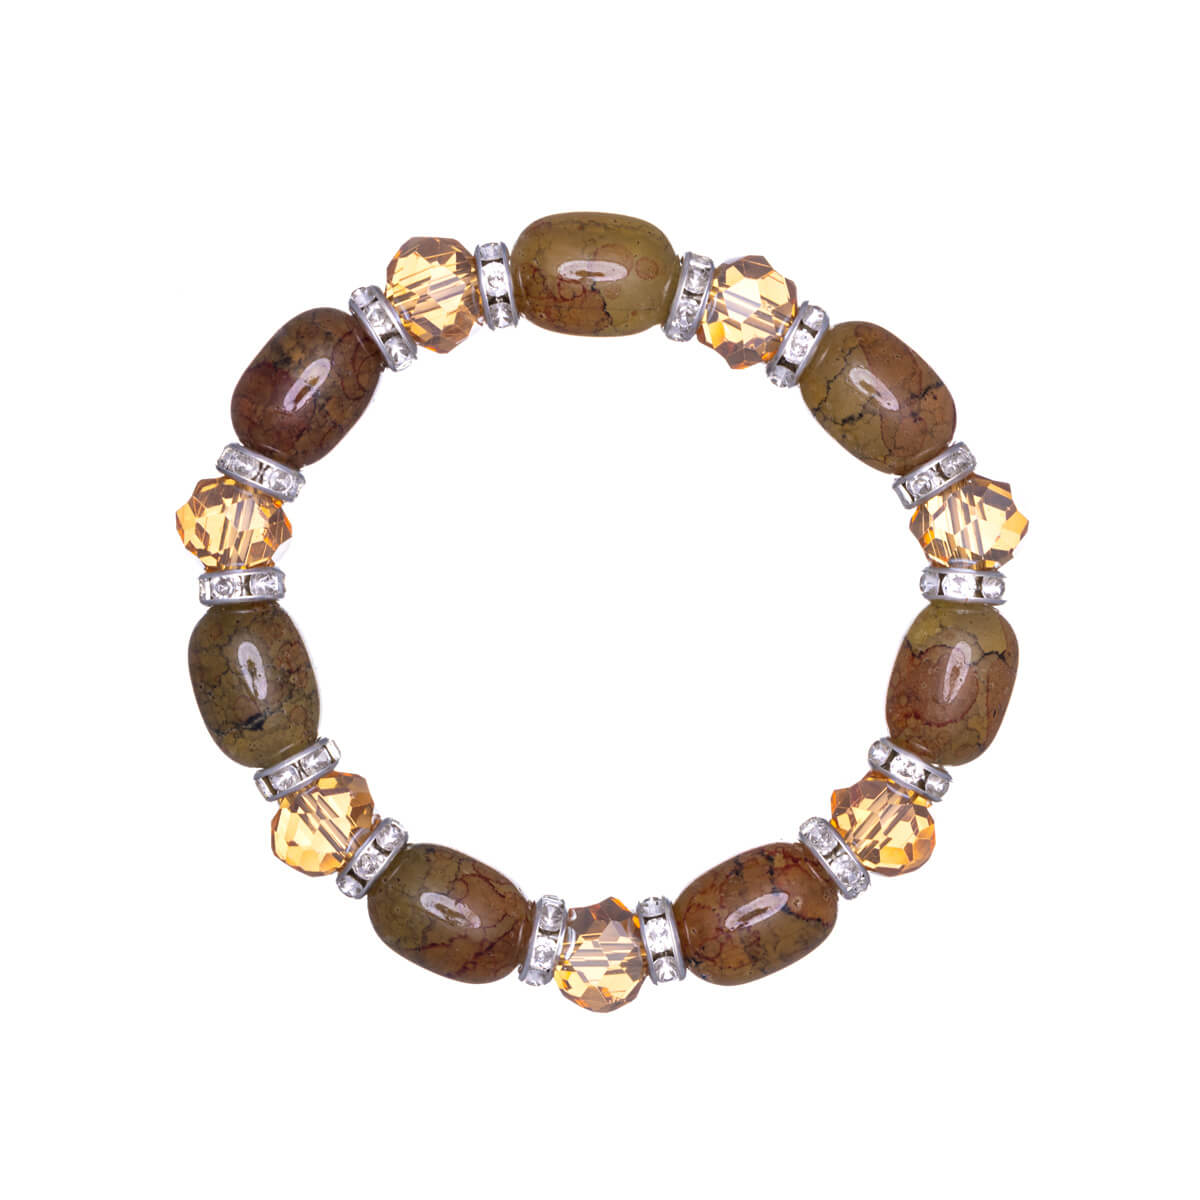 Elastic bracelet with stones and beveled glass stones